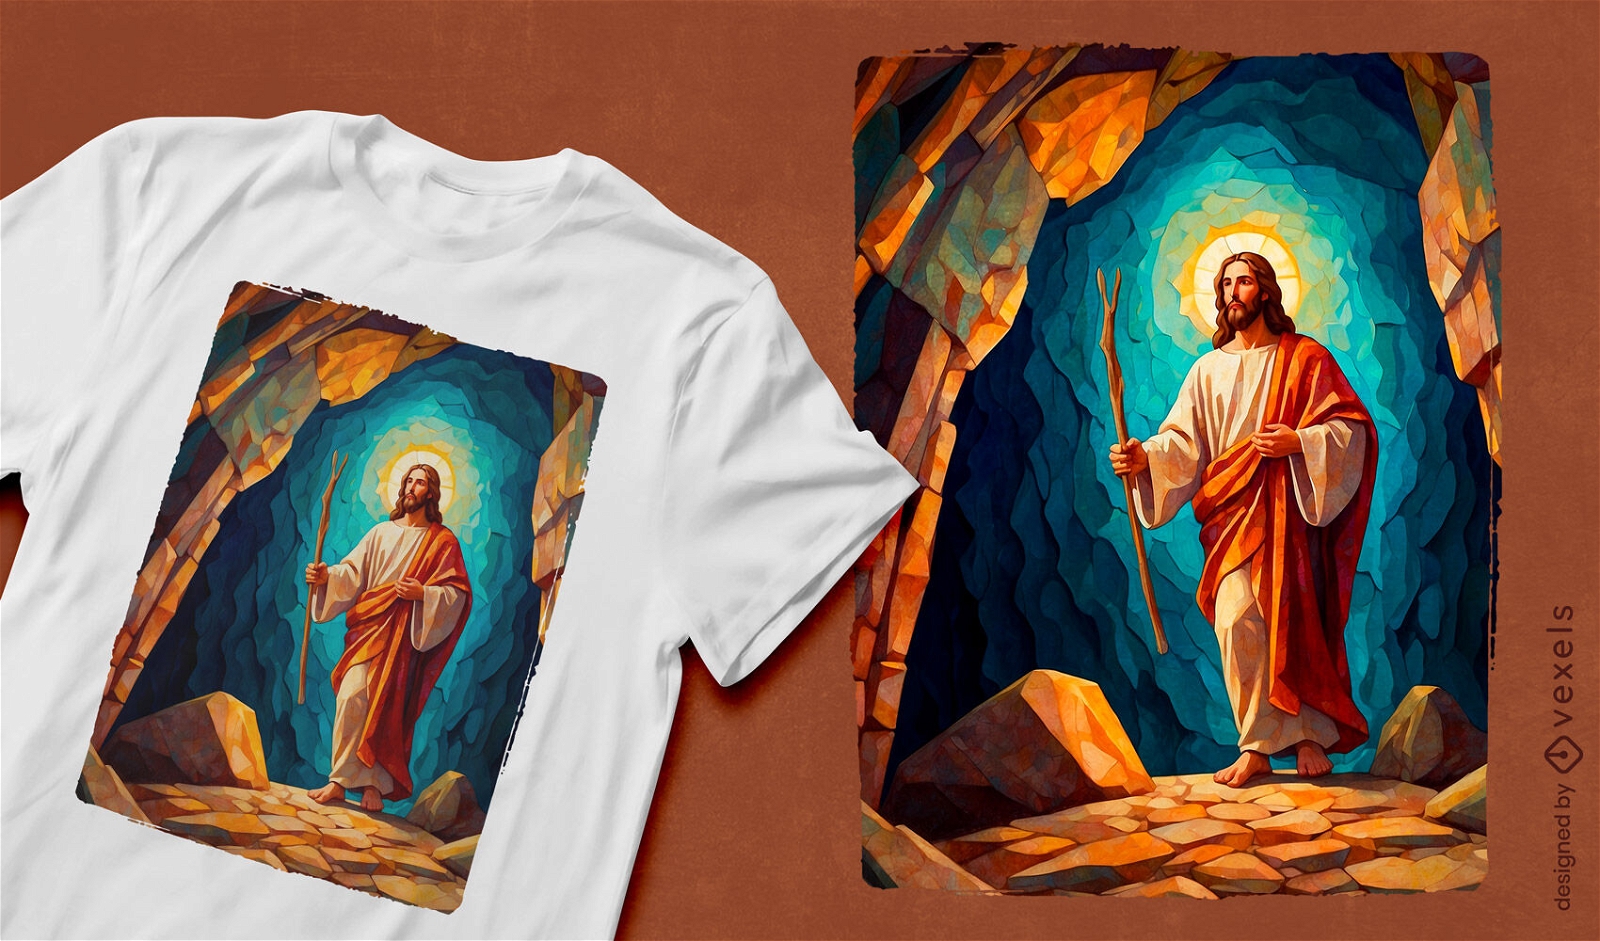 Dise?o de camiseta con retrato de escena de Jesucristo.